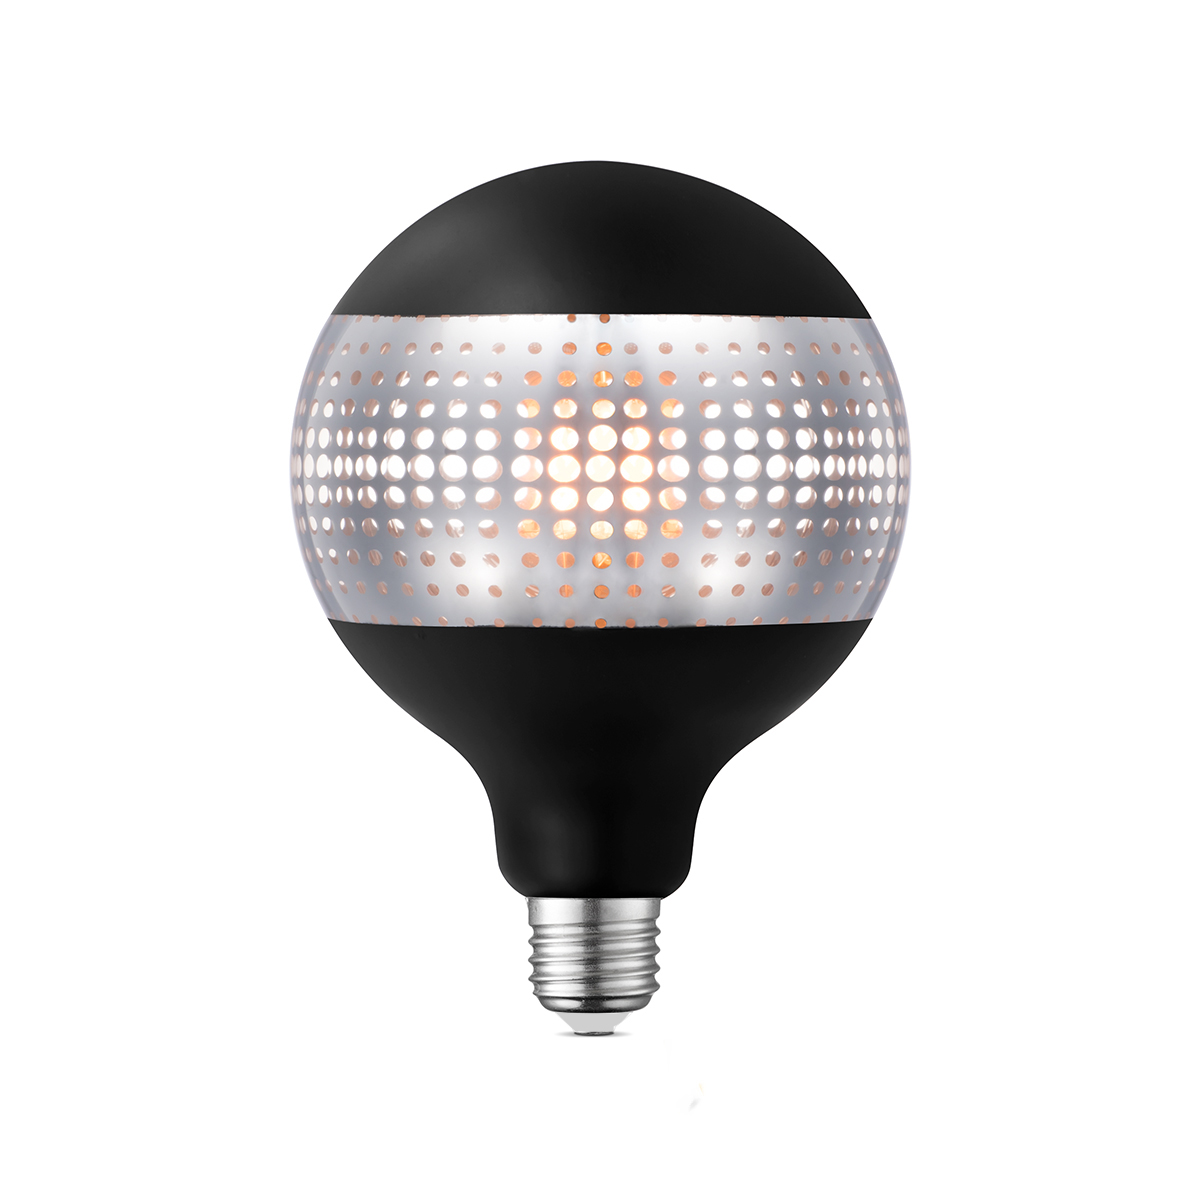 Tangla lighting - TLB-8120-04BS - LED Light Bulb Single Spiral filament - G125 4W graphic design - dimmable - E27